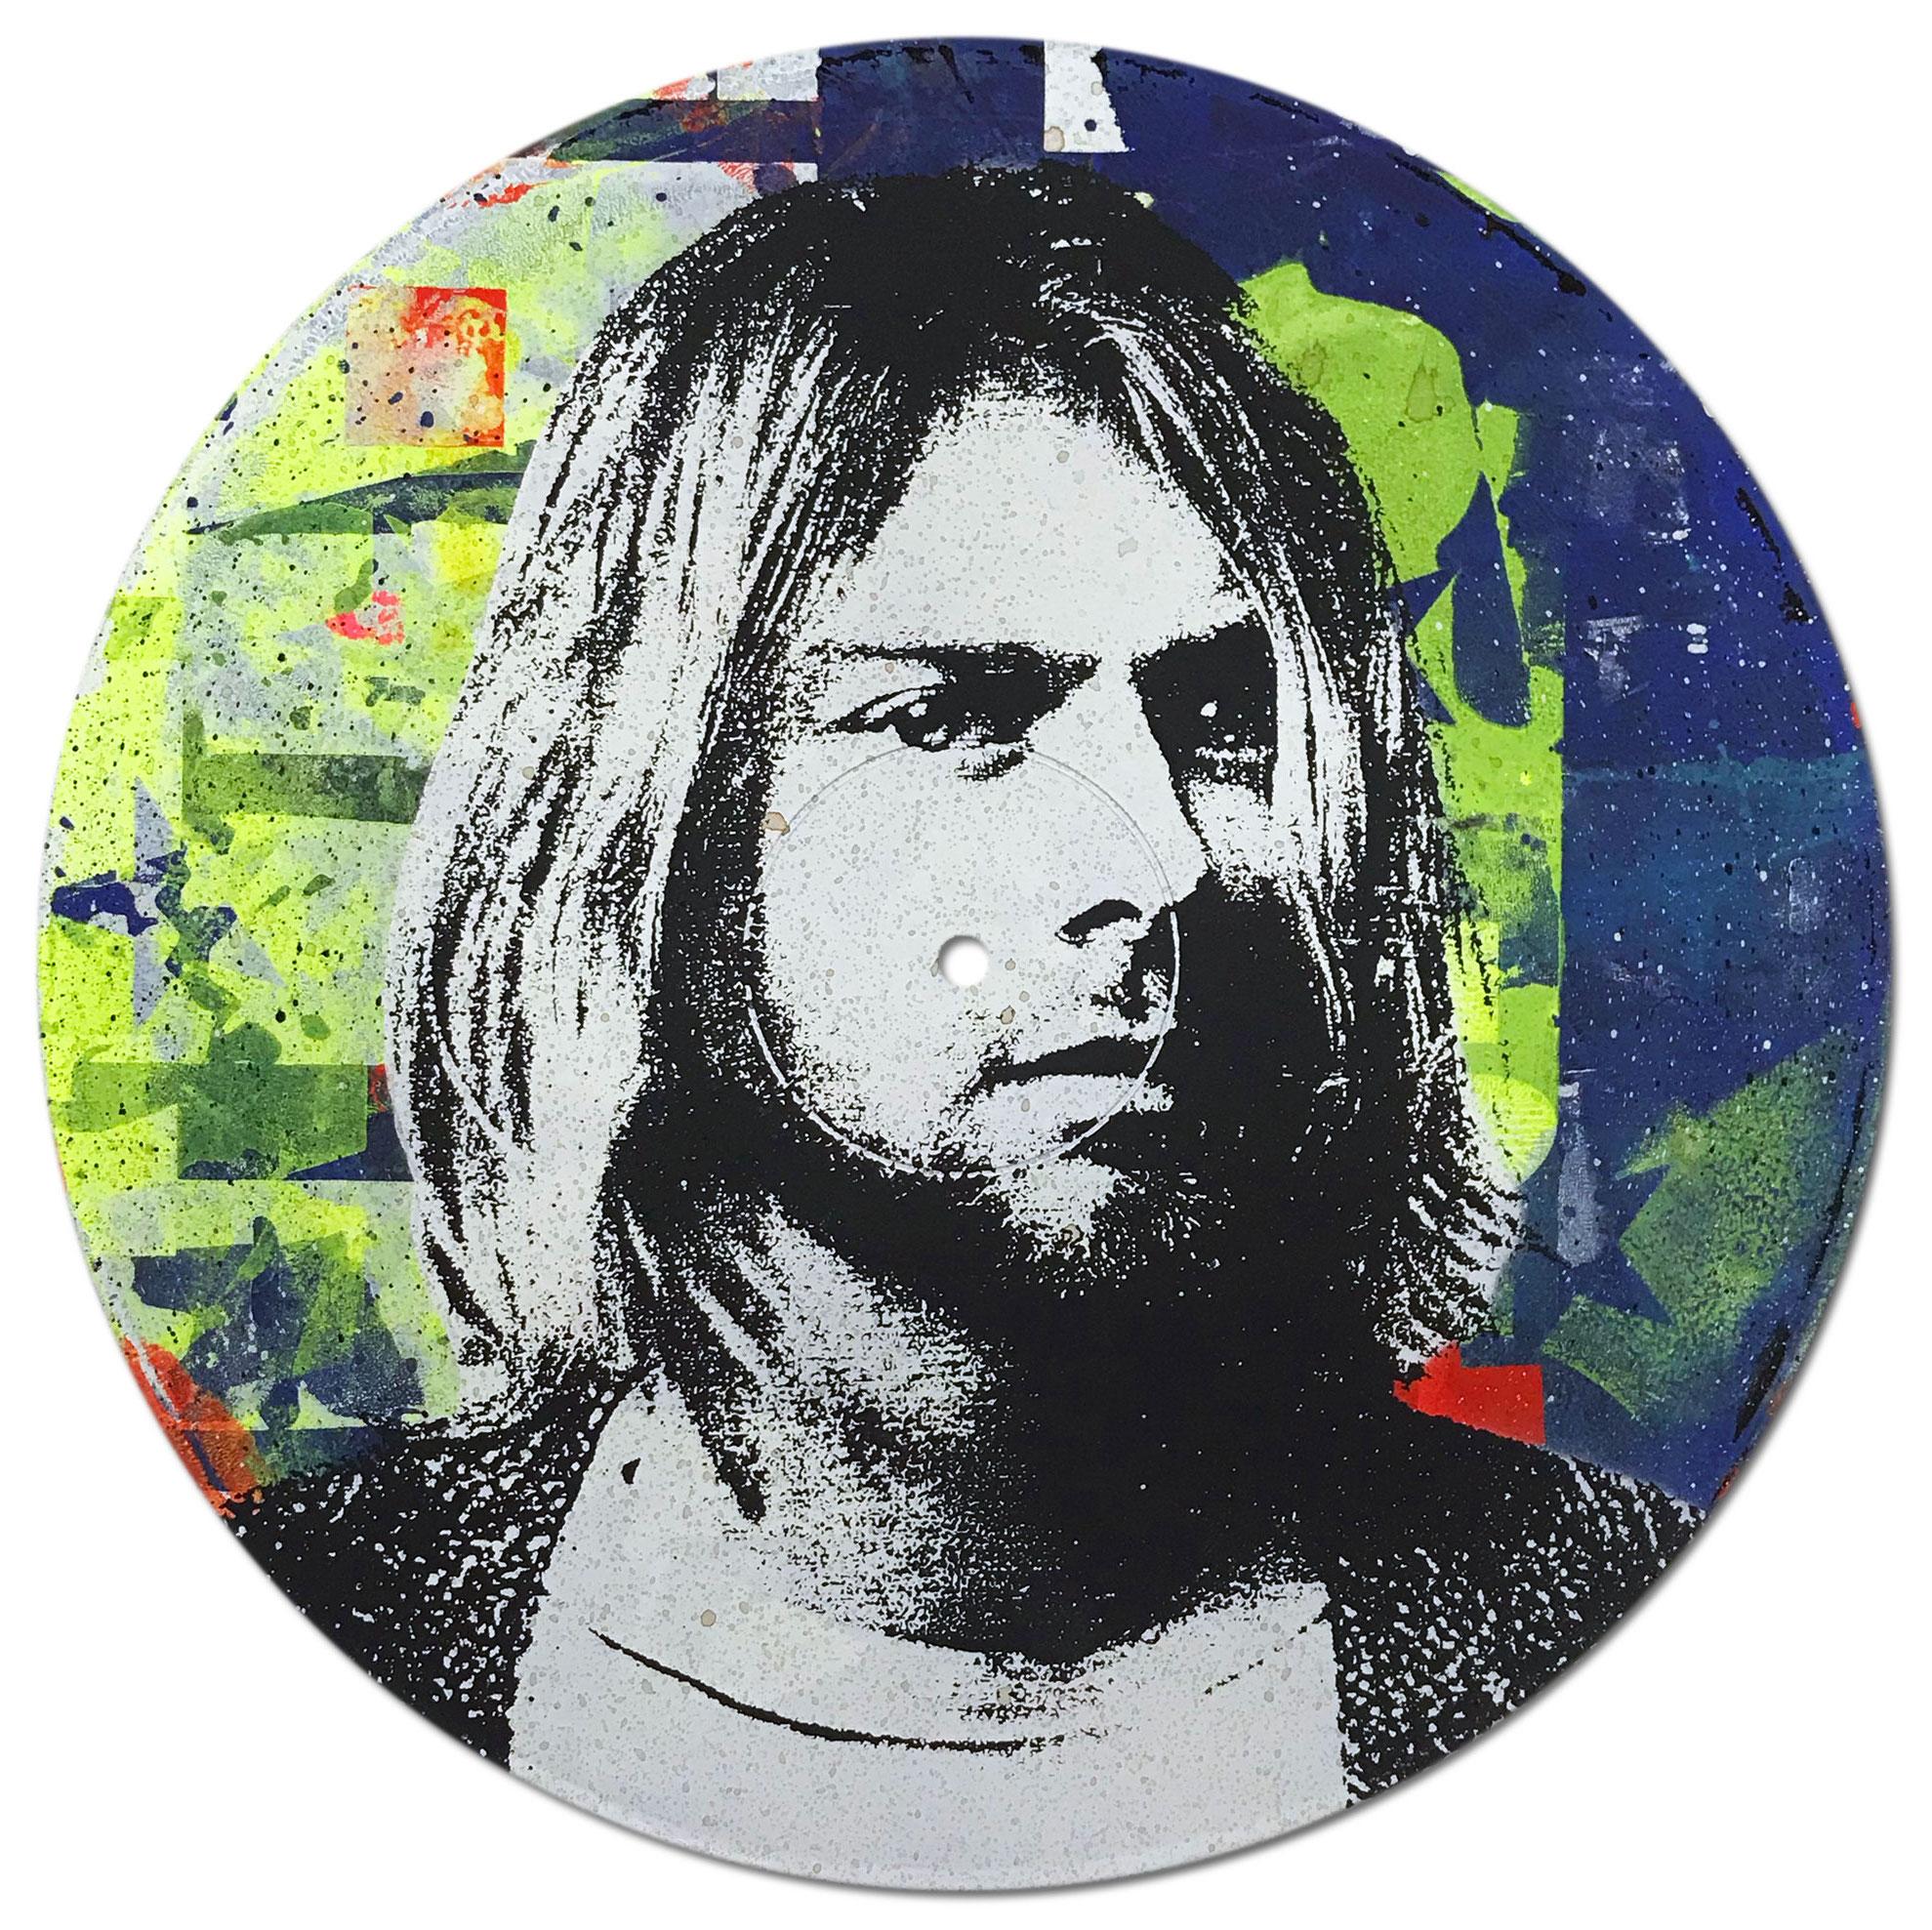 Kurt Cobain Vinyl 1-10, Greg Gossel Pop Art LP Record (Singles & Sets Available)

These vinyl LP's were created for Greg Gossel's show 